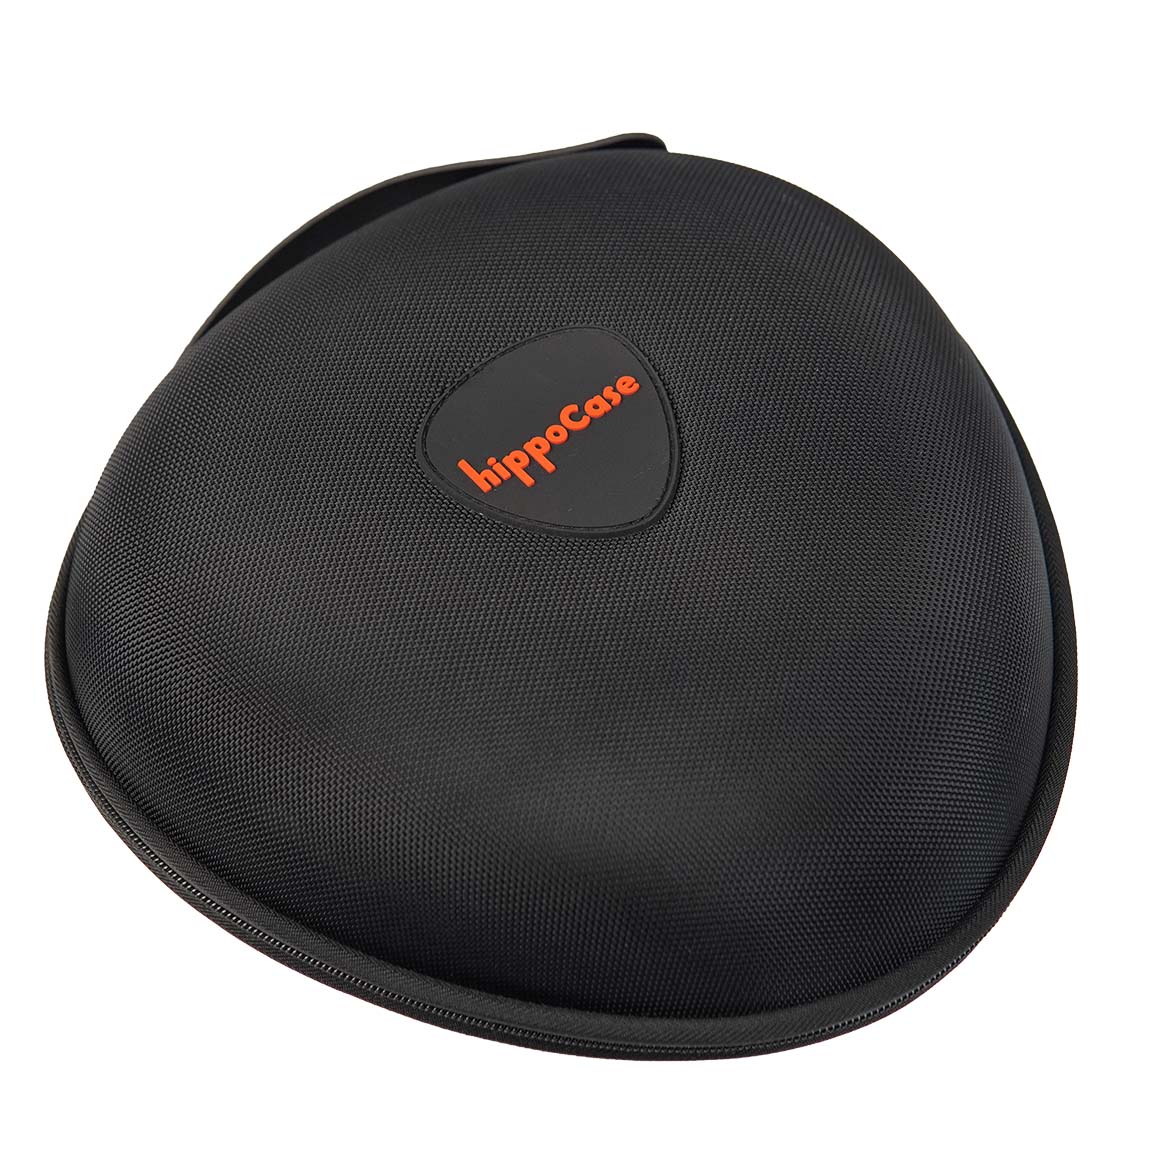 Headphone-Zone-Hippo-Large Headphone Case